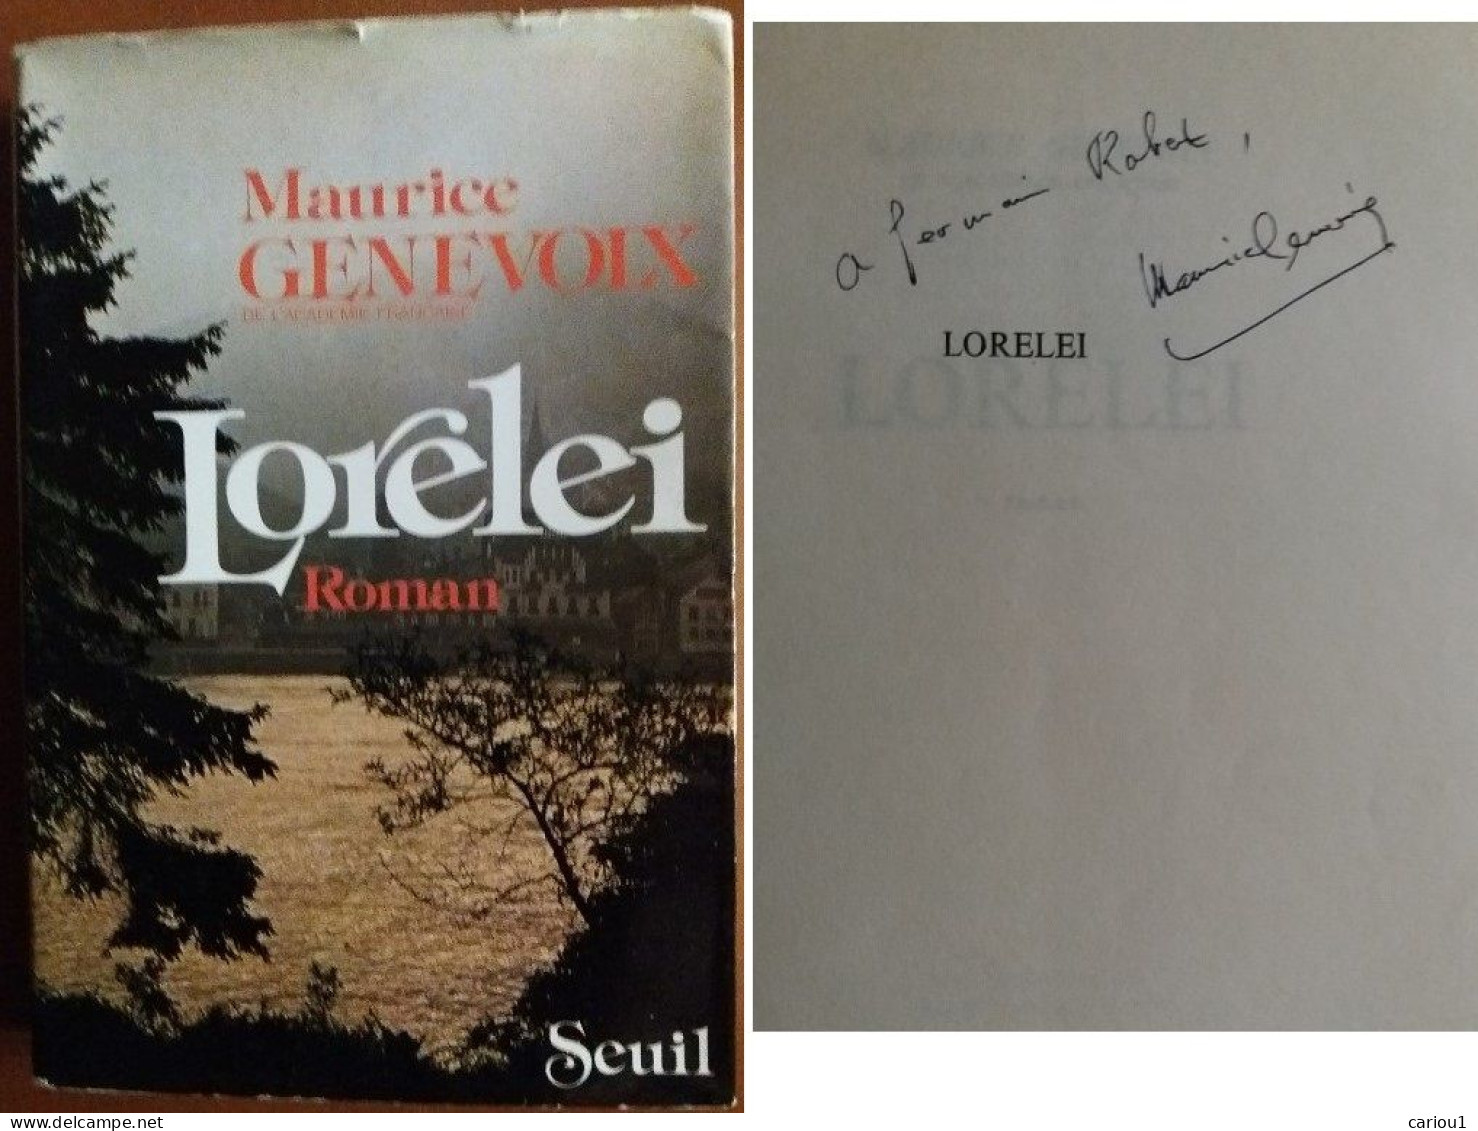 C1 Maurice GENEVOIX LORELEI 1978 Envoi DEDICACE SIGNED Allemagne OFFENBACH MAIN PORT INCLUS France - Libri Con Dedica